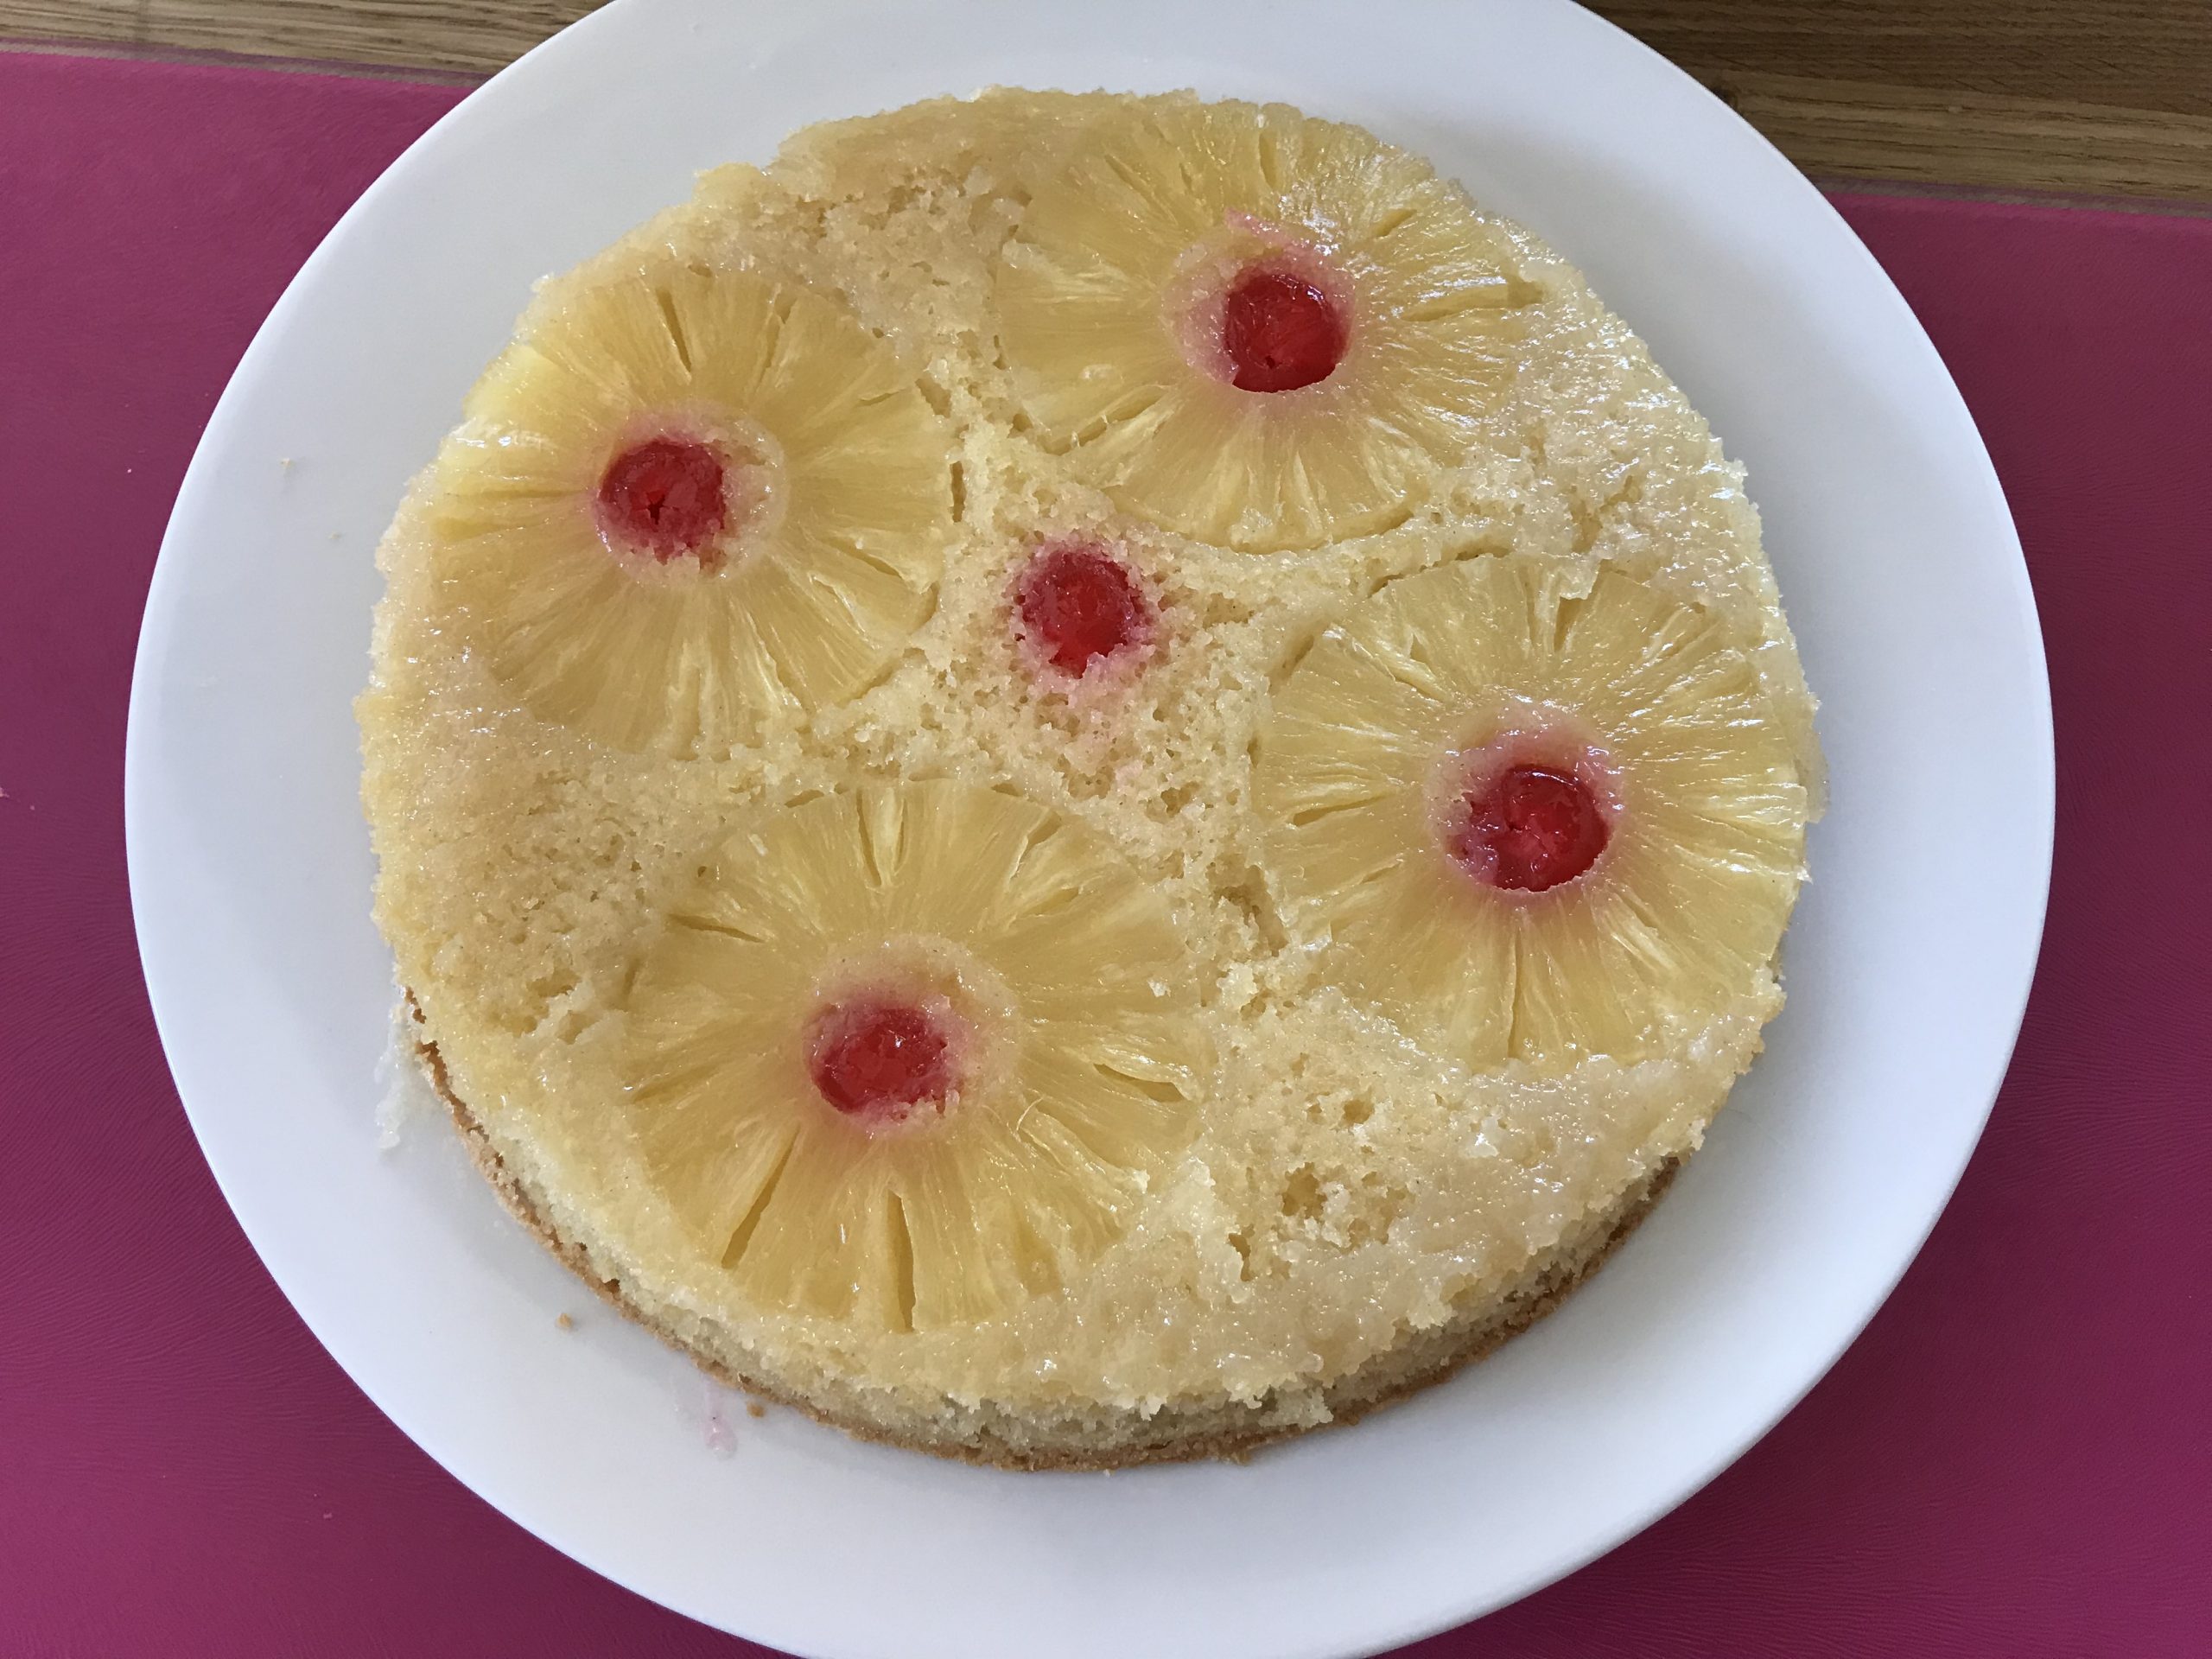 Amazon.com: Nordic Ware Cake Pan Pineapple Upsidedown, 8-cup, Sea Glass:  Novelty Cake Pans: Home & Kitchen